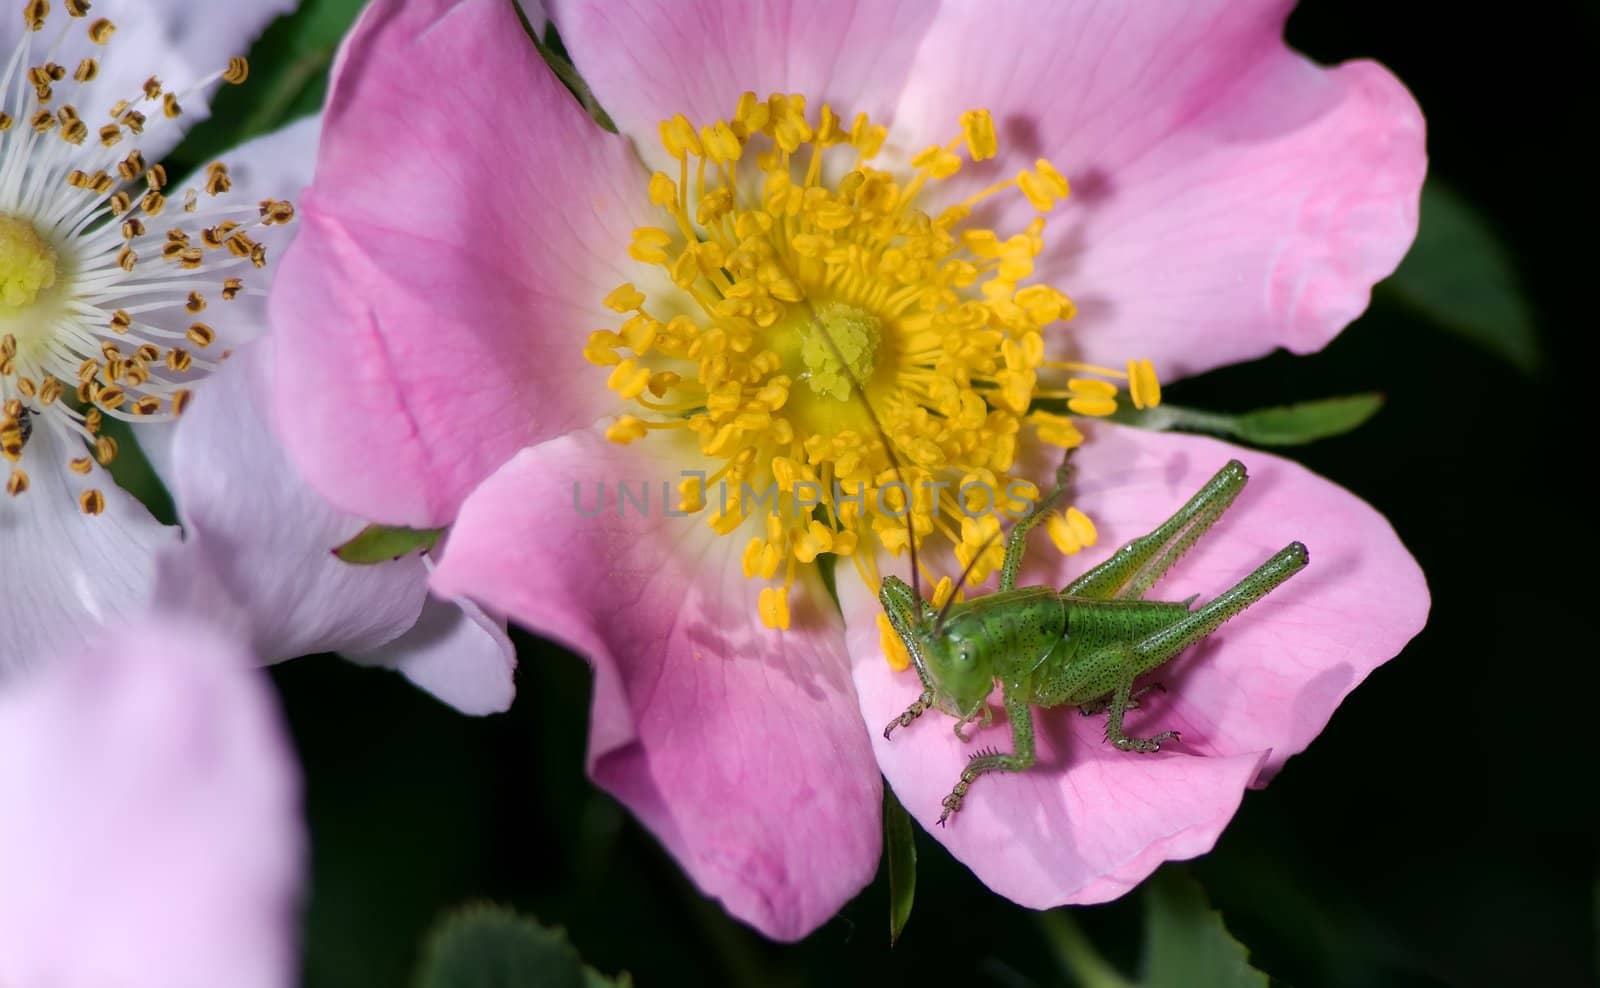 Katydid on wild rose by baggiovara